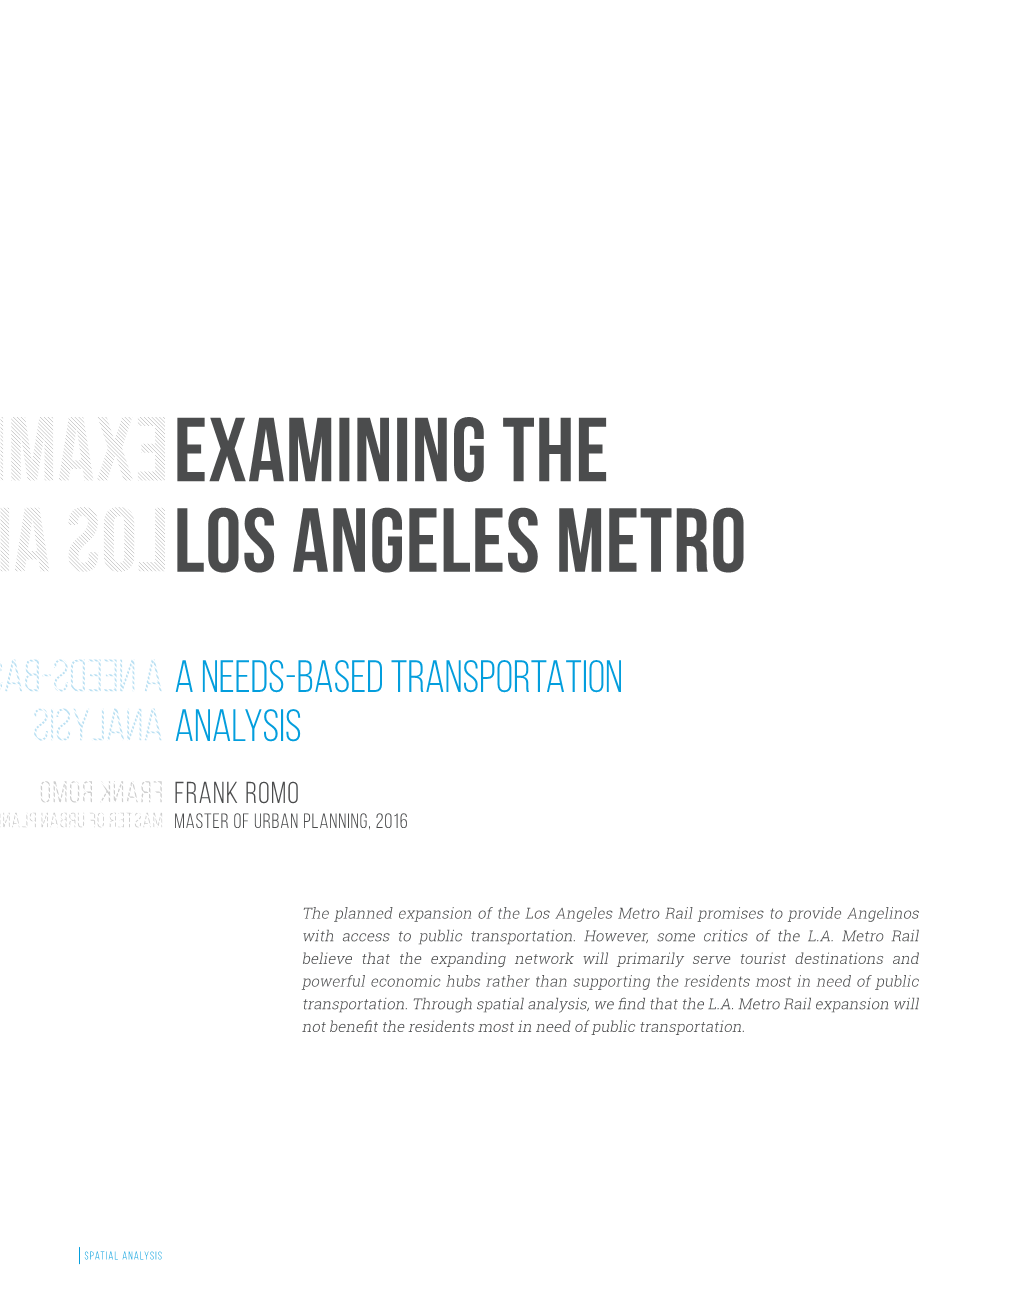 Examining the Los Angeles Metro Examining the Los Angeles Metro